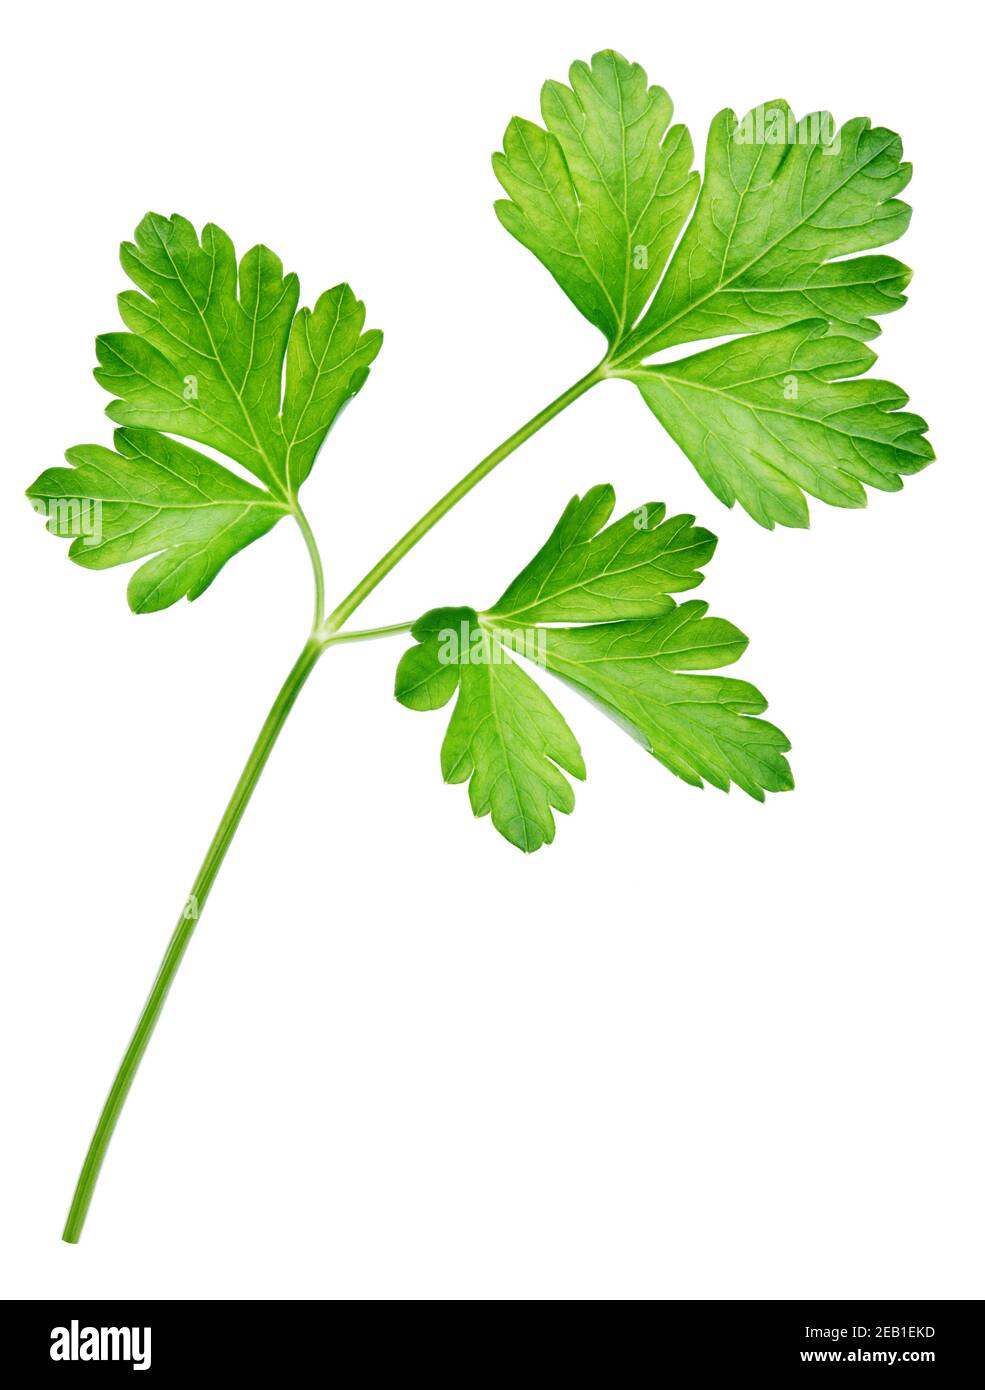 Garden parsley herb (cilantro) leaf isolated on white background Stock Photo